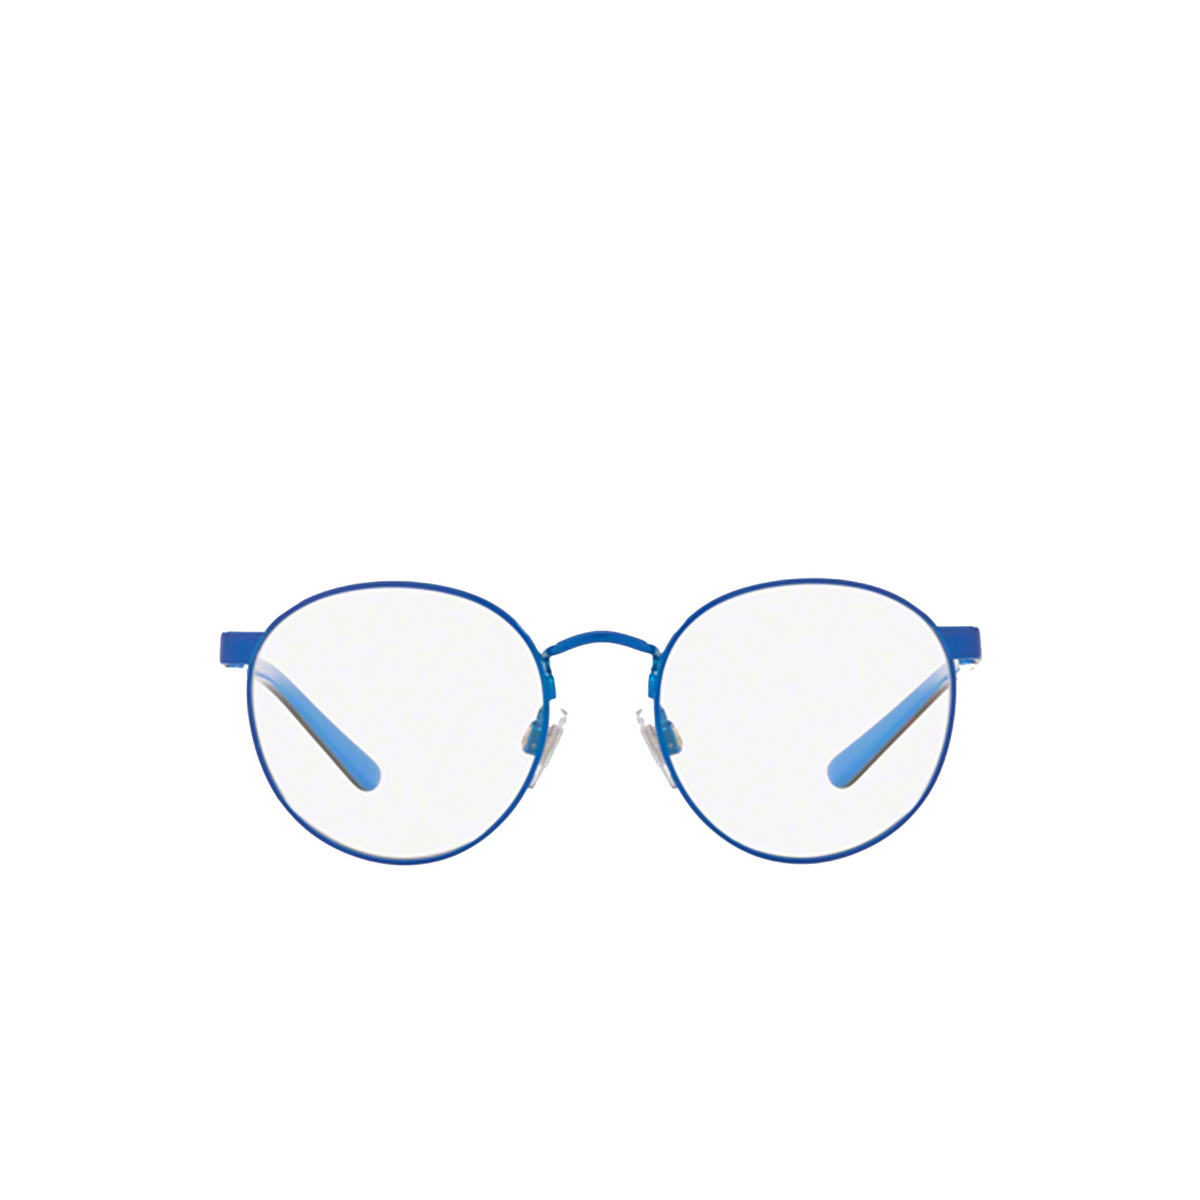 Polo Ralph Lauren PP8040 Eyeglasses 9102 SHINY ELECTRIC BLUE - front view